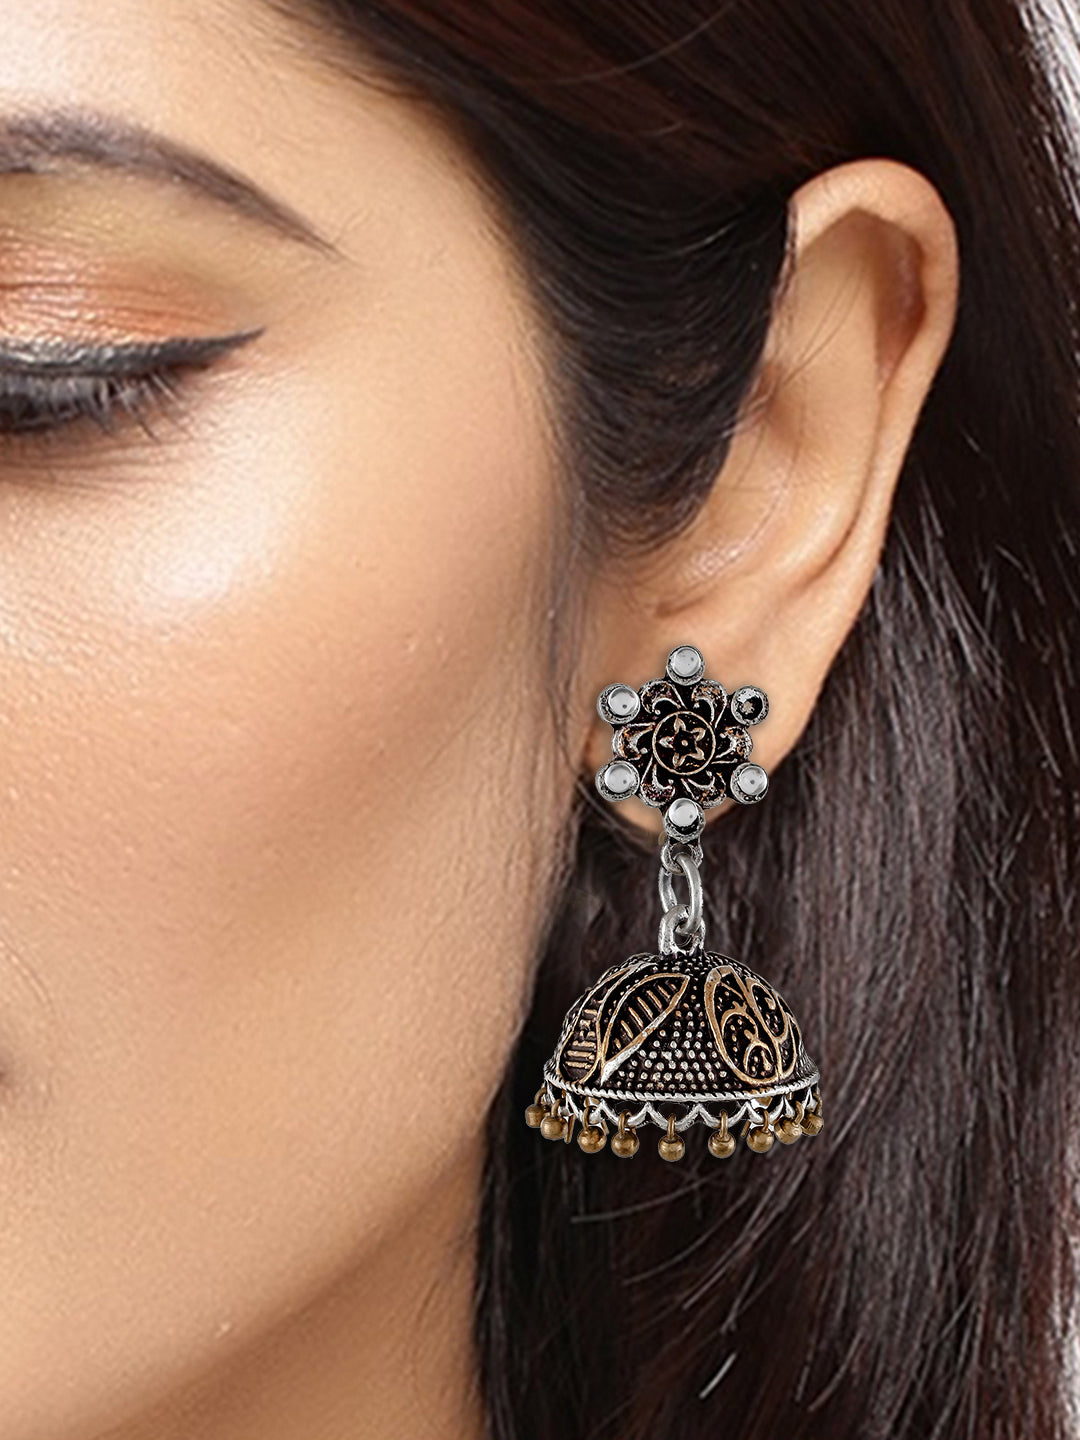 Big Yellow Traditional Jhumka Earrings for Girls by FashionCrab